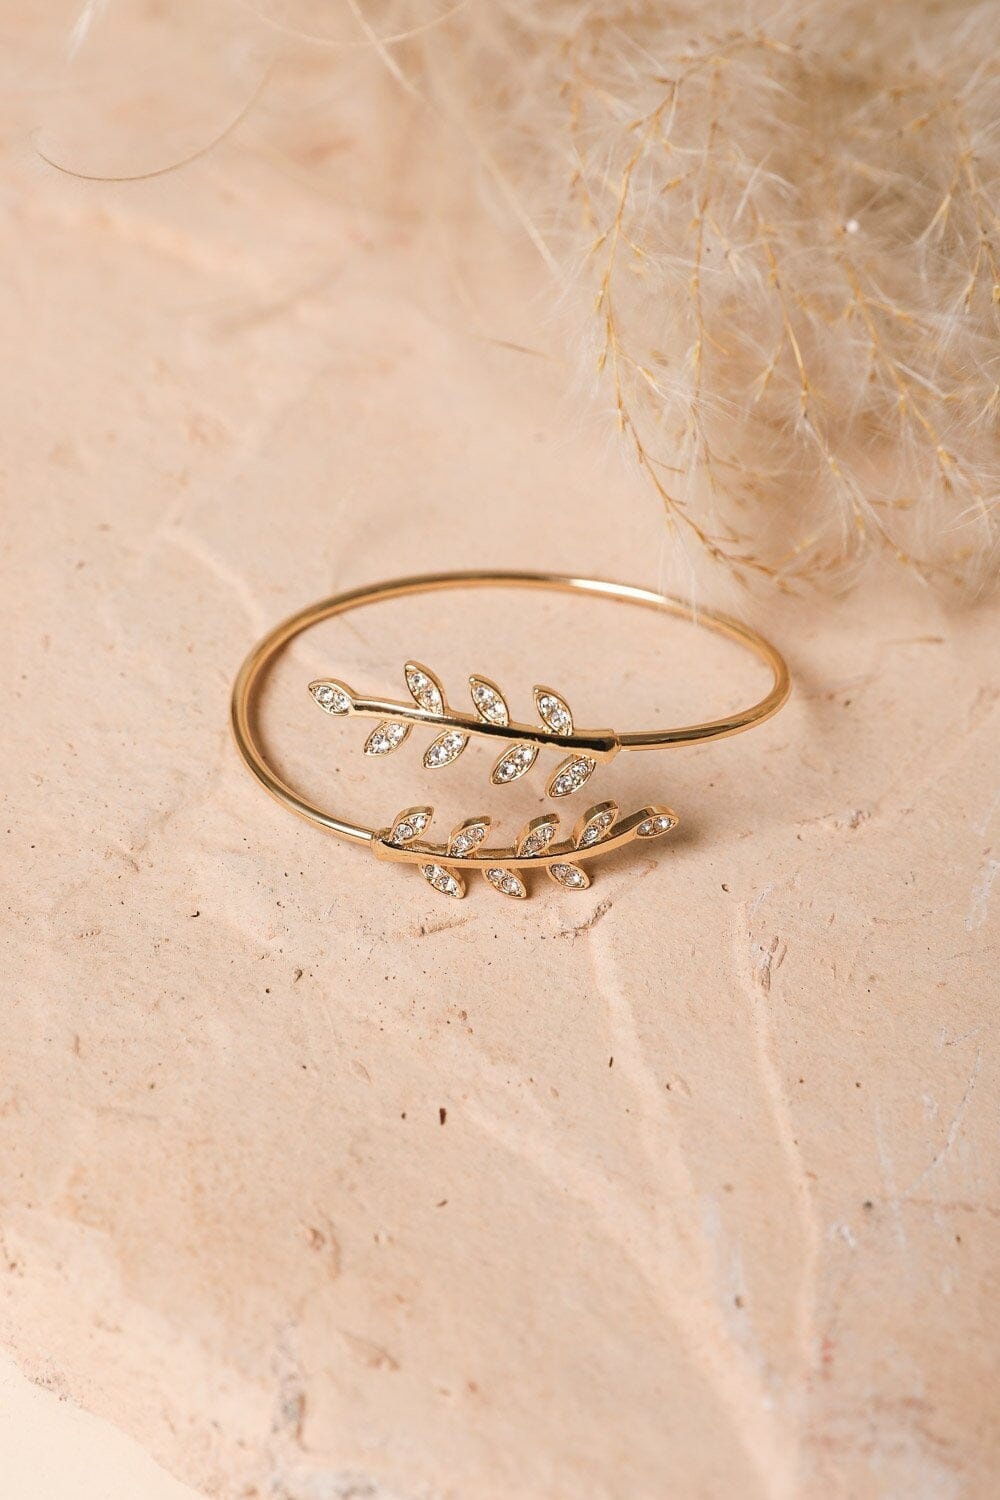 Olive Branch Minimal Bracelet Jewelry Leto Collection 